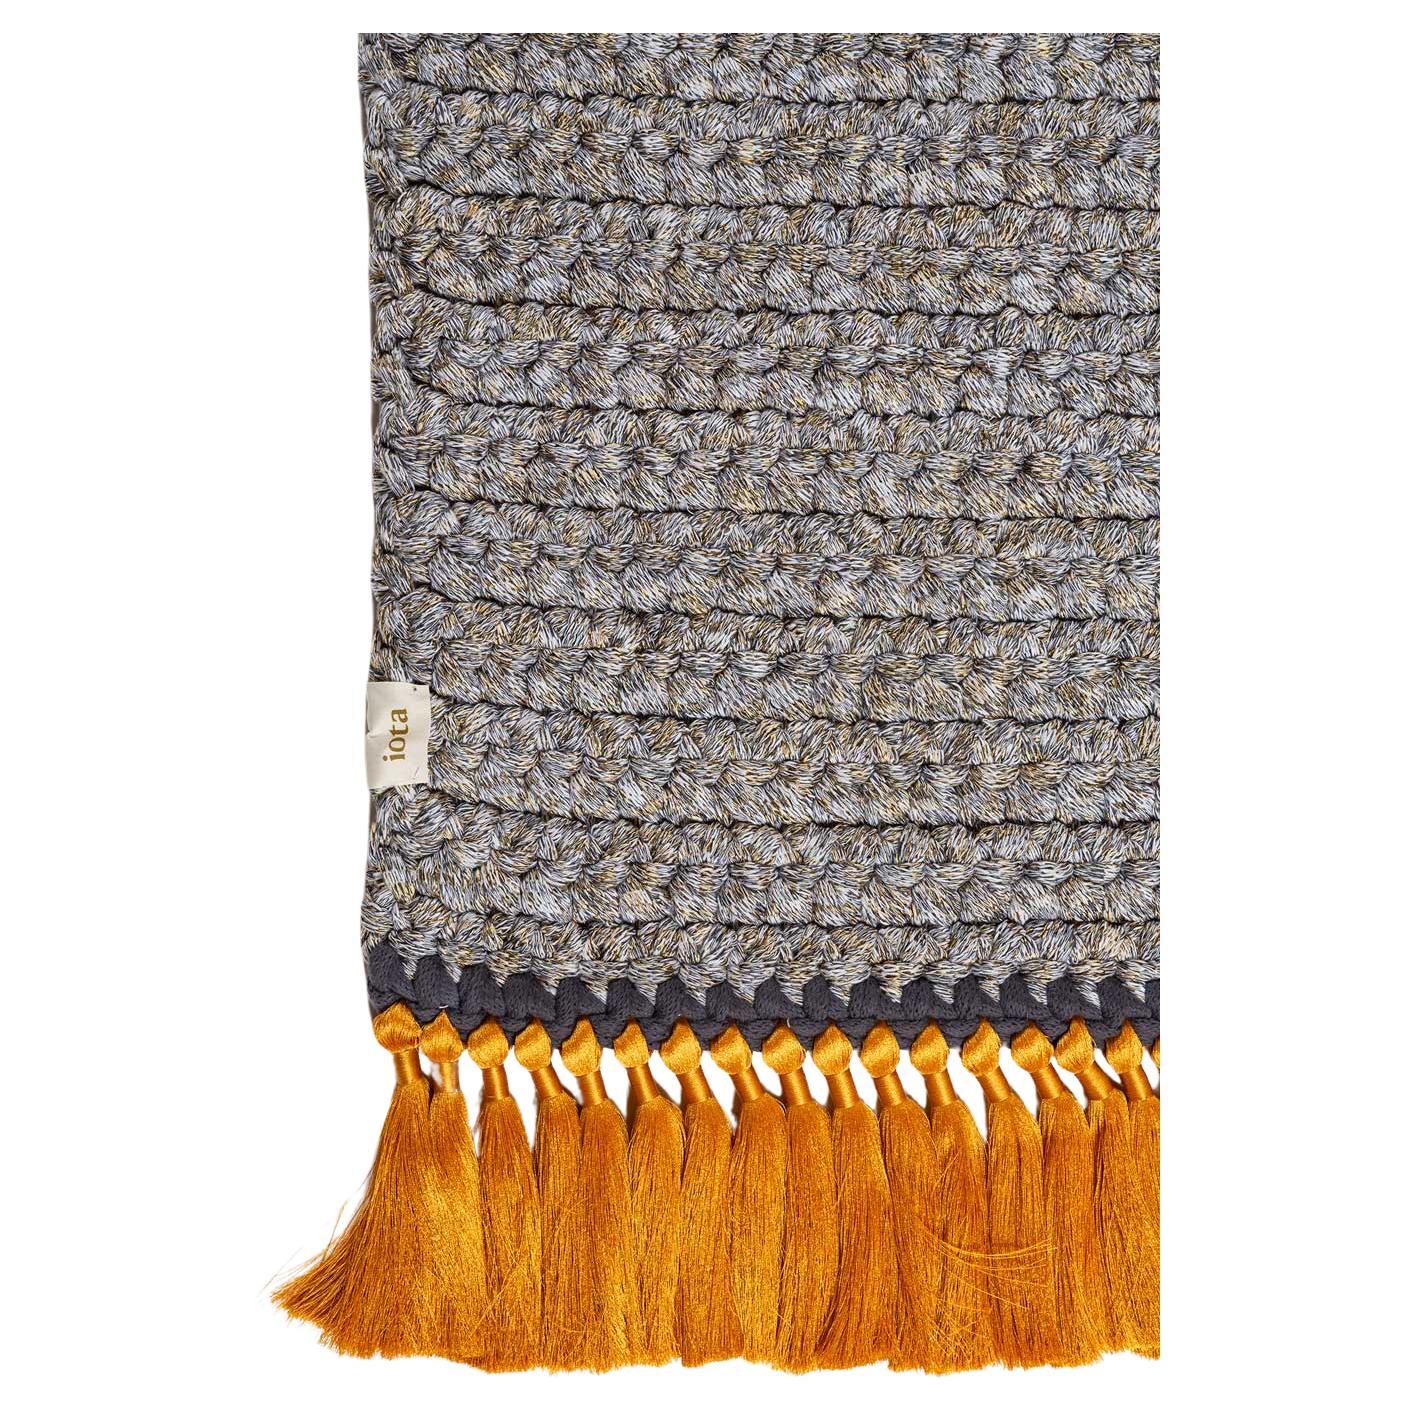 Israeli Handmade Crochet 200x300 Thick Rug in Grey Beige Golden with tassels For Sale